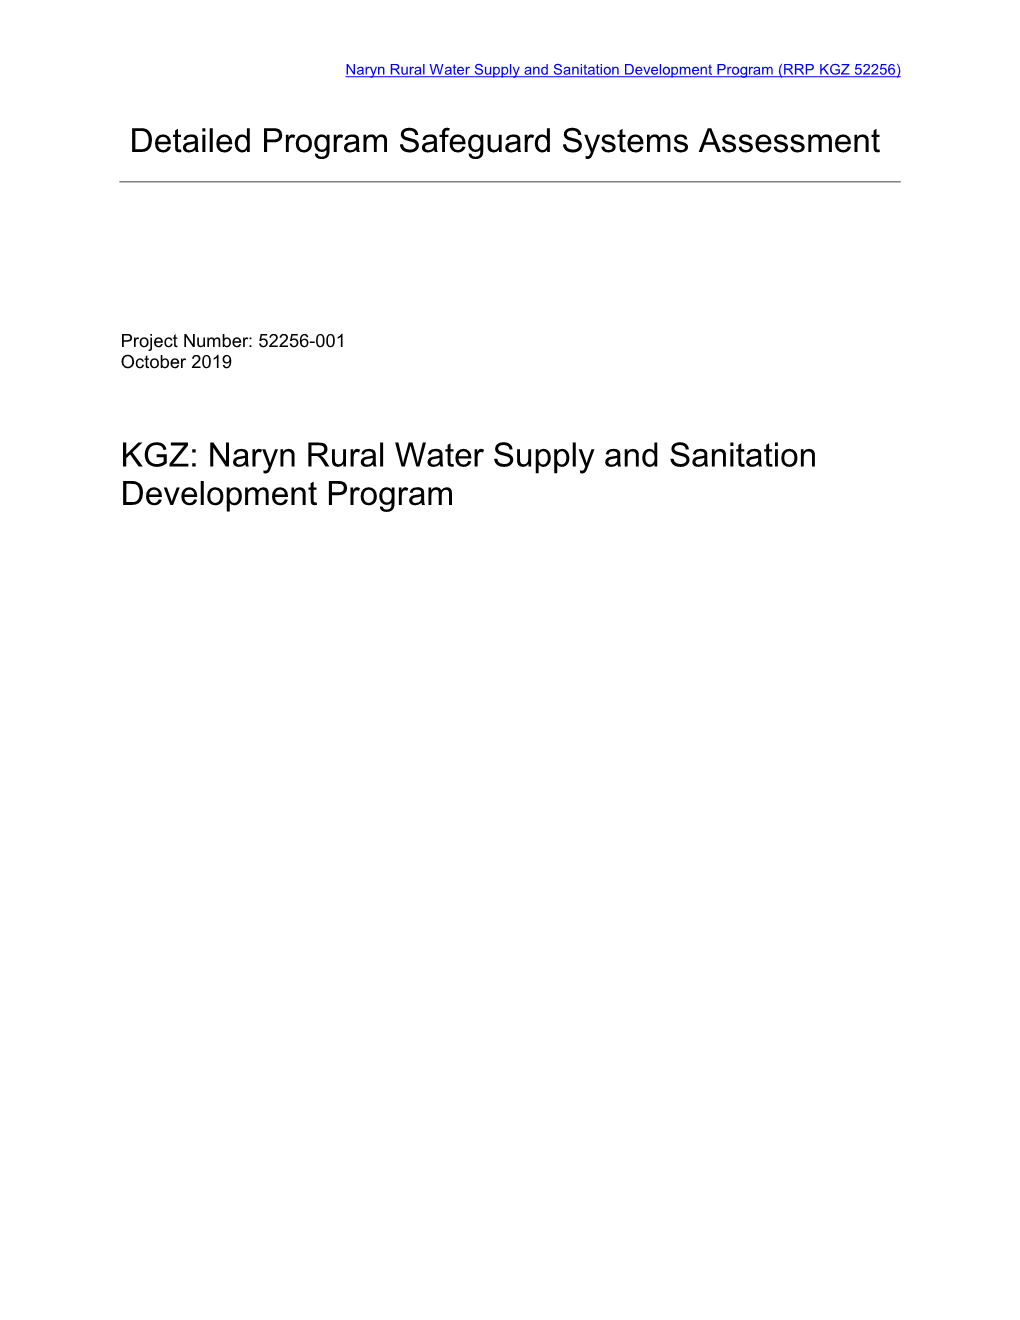 Detailed Program Safeguard Systems Assessment